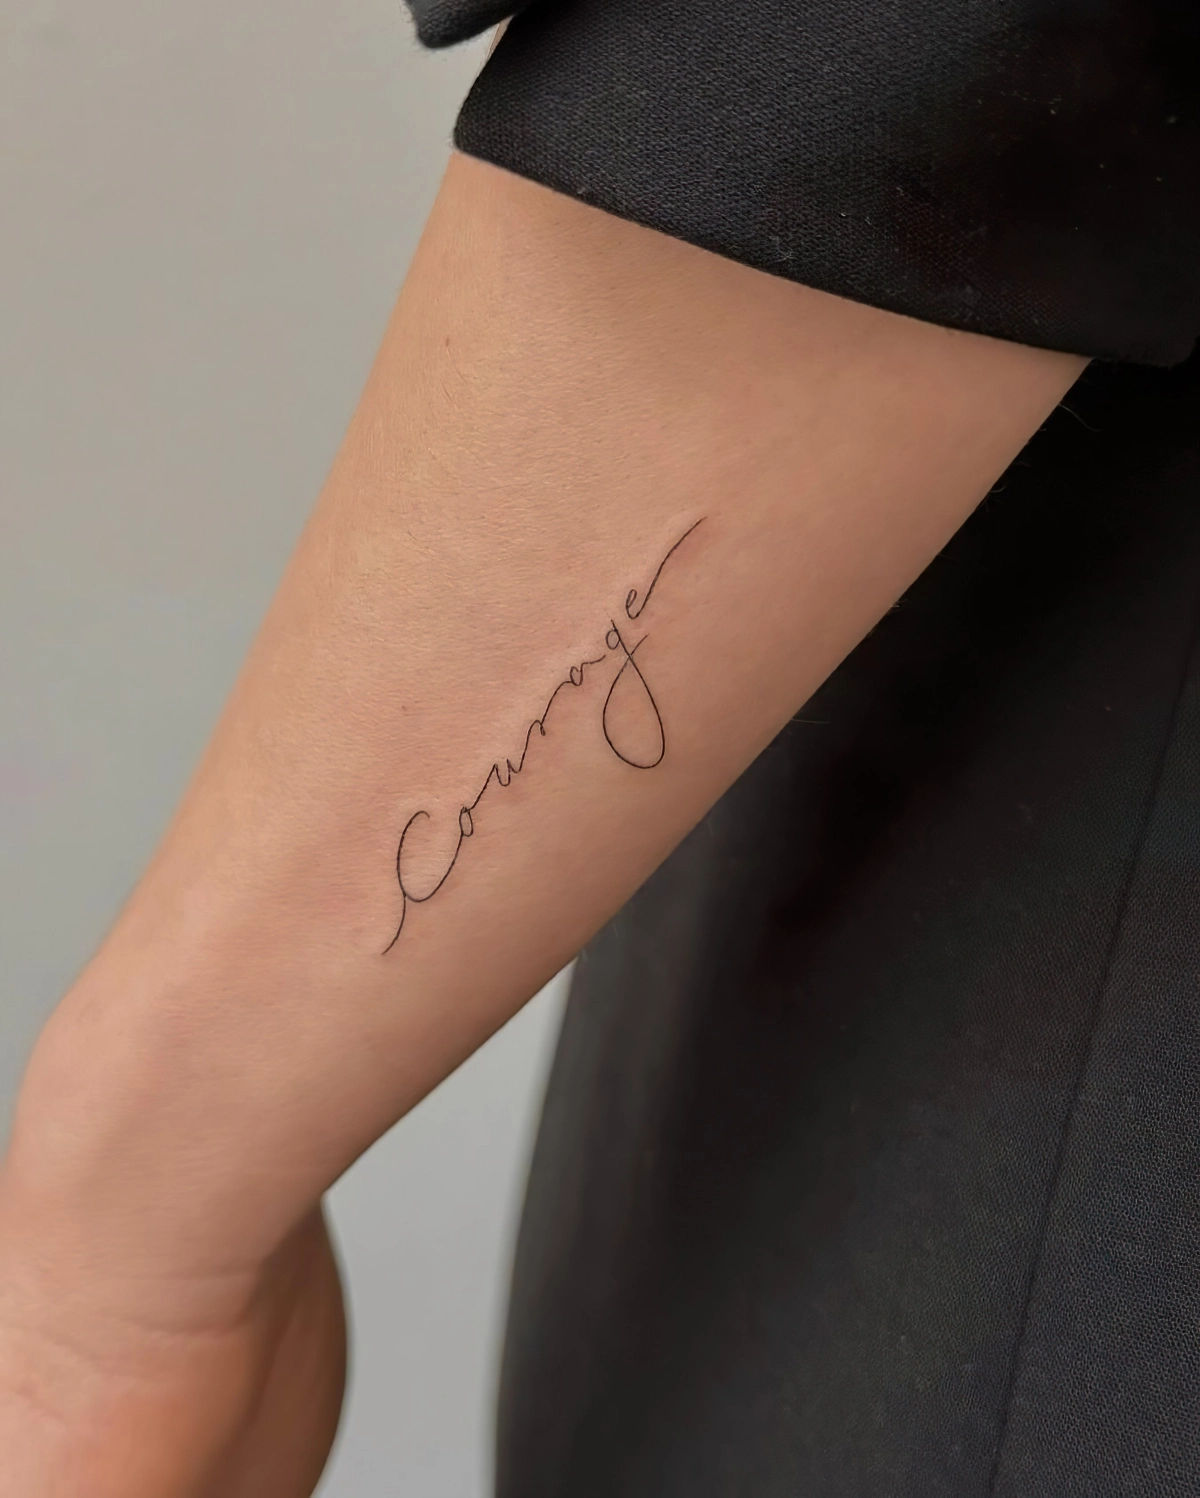 ecriture tatouage femme discret mot courage bras dessin corporel